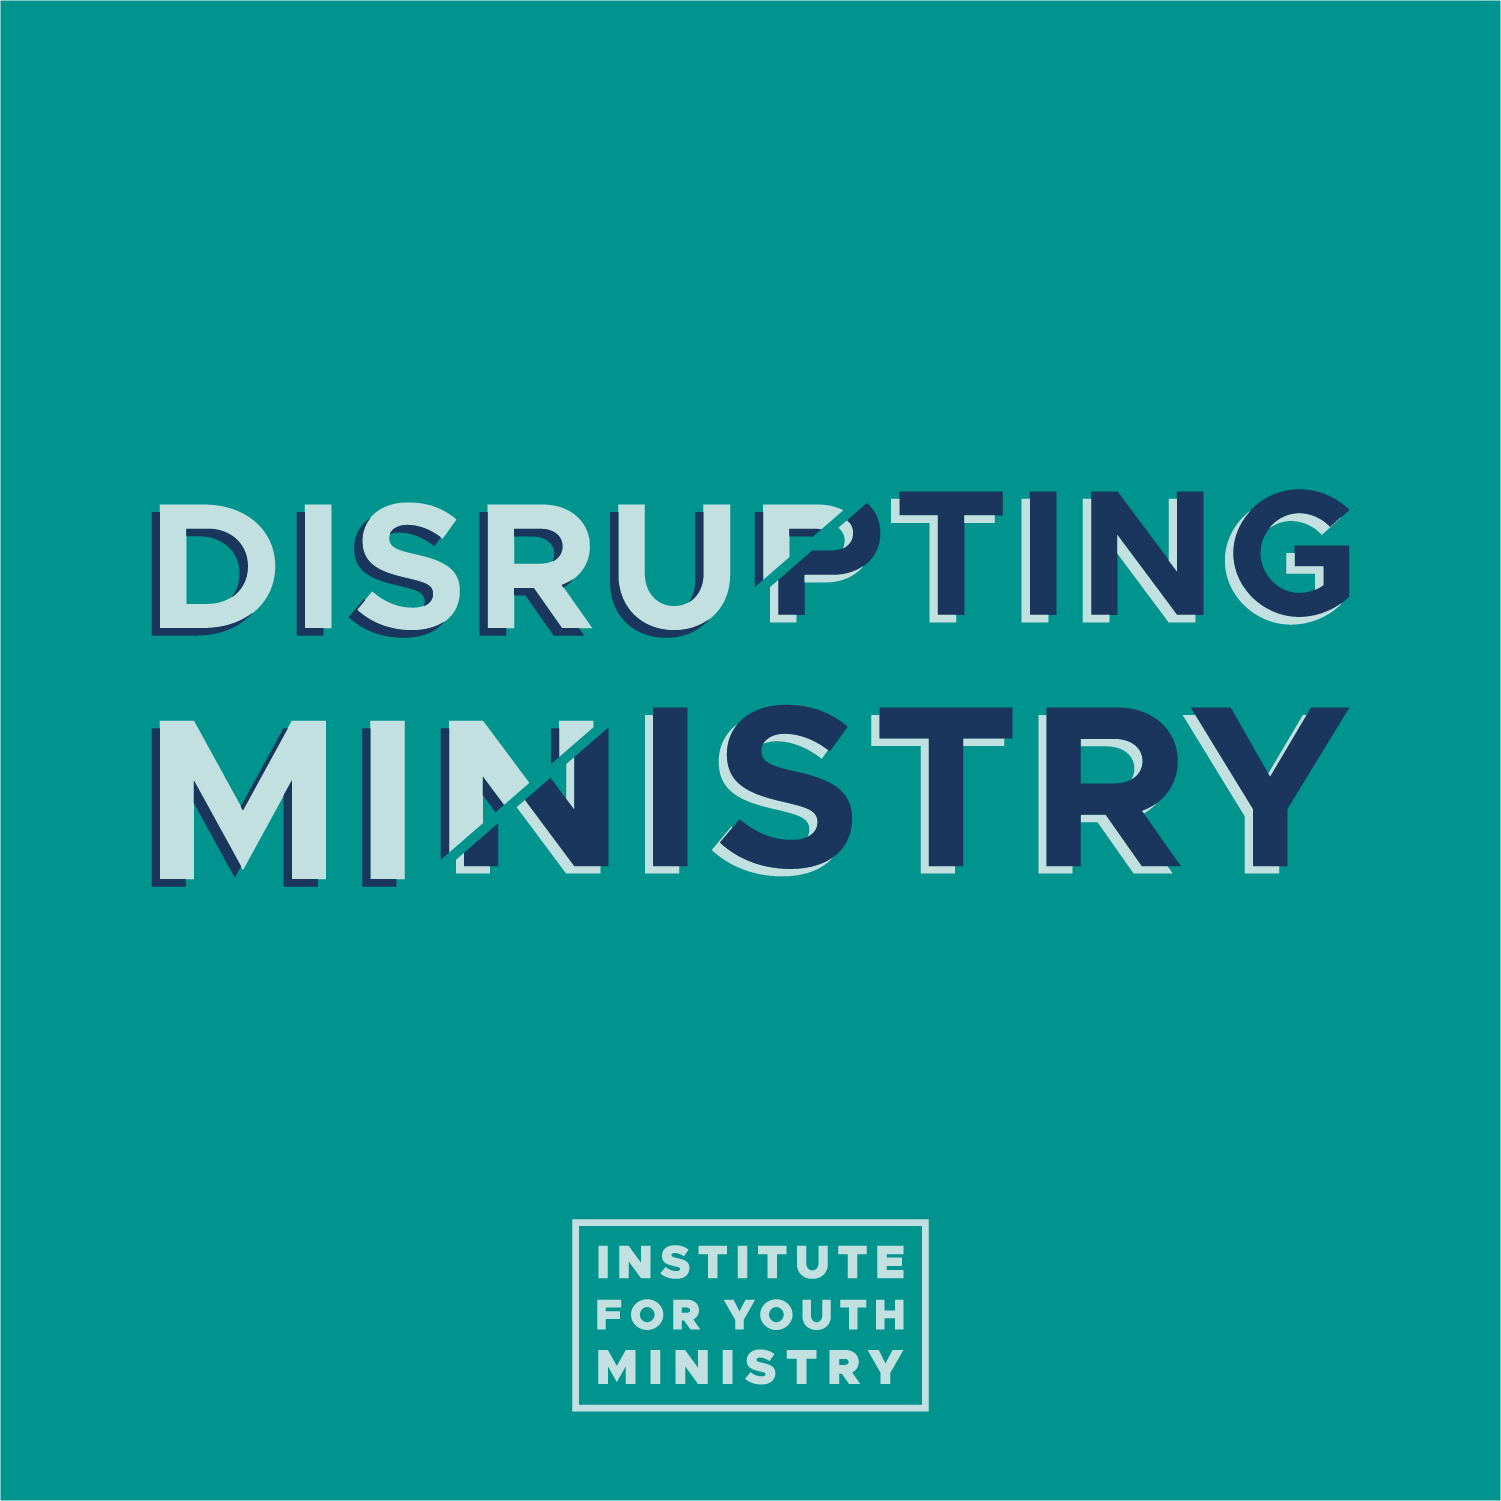 A_Disrupting Ministry_Logo_720x720_Google Image.png